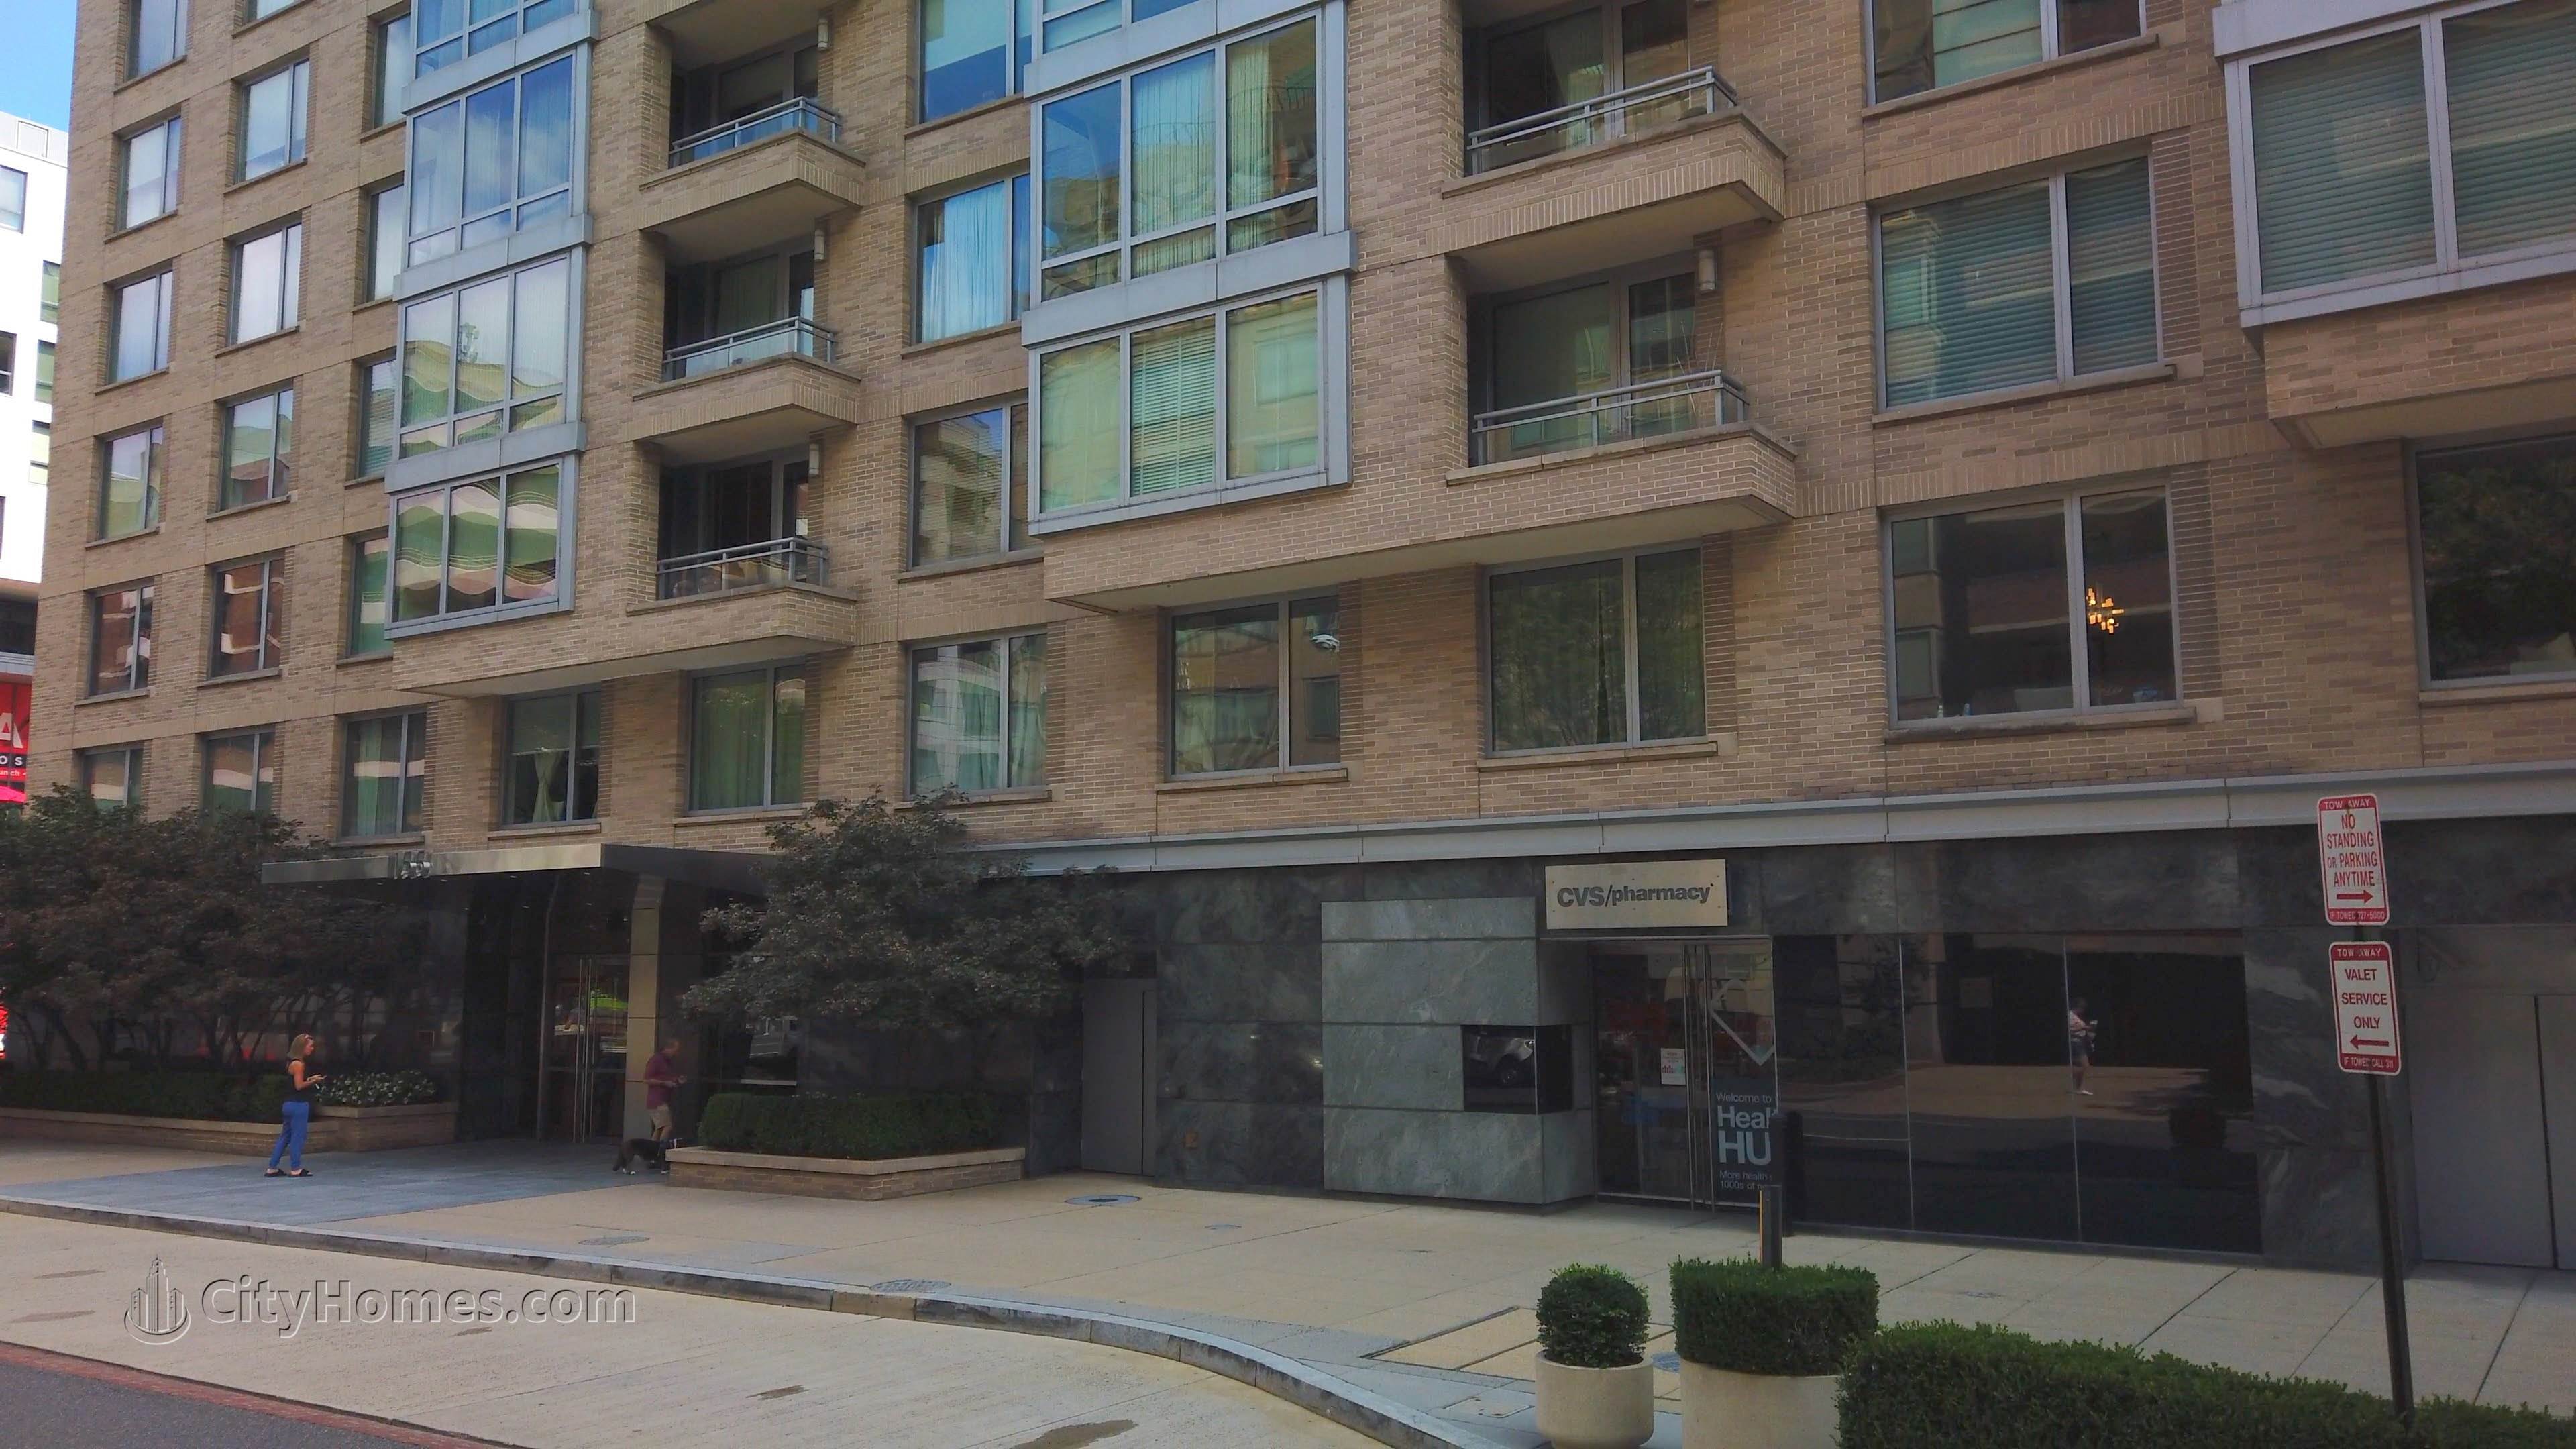 5. The Ritz-Carlton Washington byggnad vid 1111 & 1155 23rd Street NW, West End, Washington, DC 20037